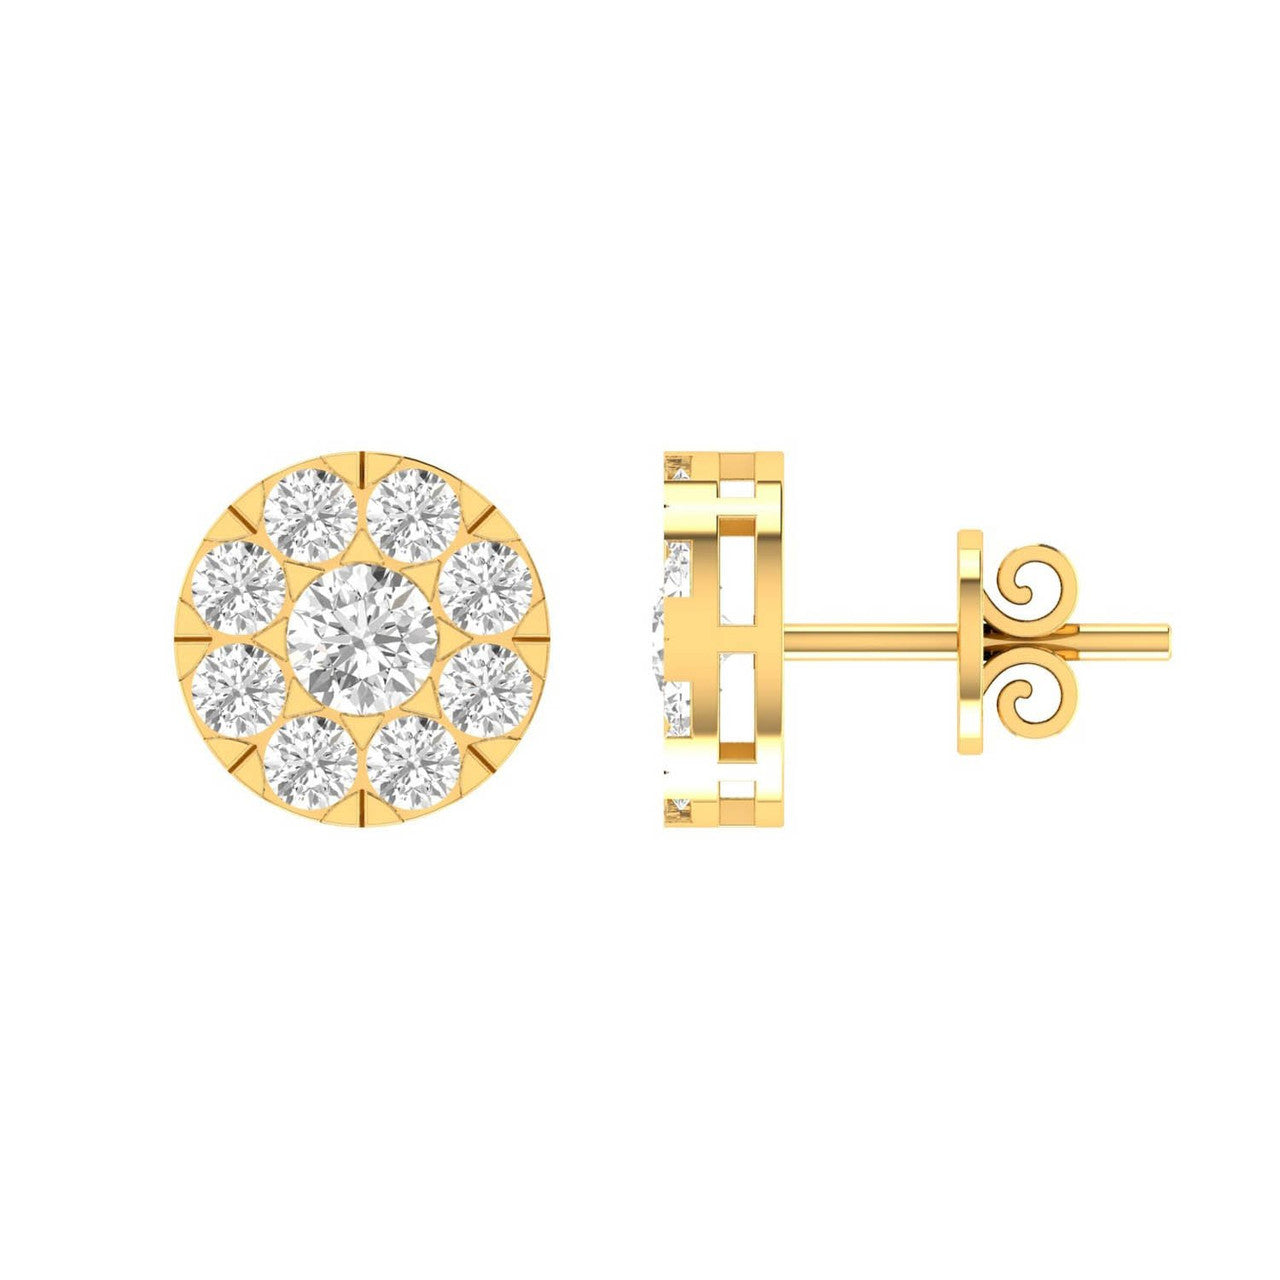 Ice Jewellery Cluster Diamond Stud Earrings with 0.20ct Diamonds in 9K Yellow Gold - 9YECLUS20GH | Ice Jewellery Australia